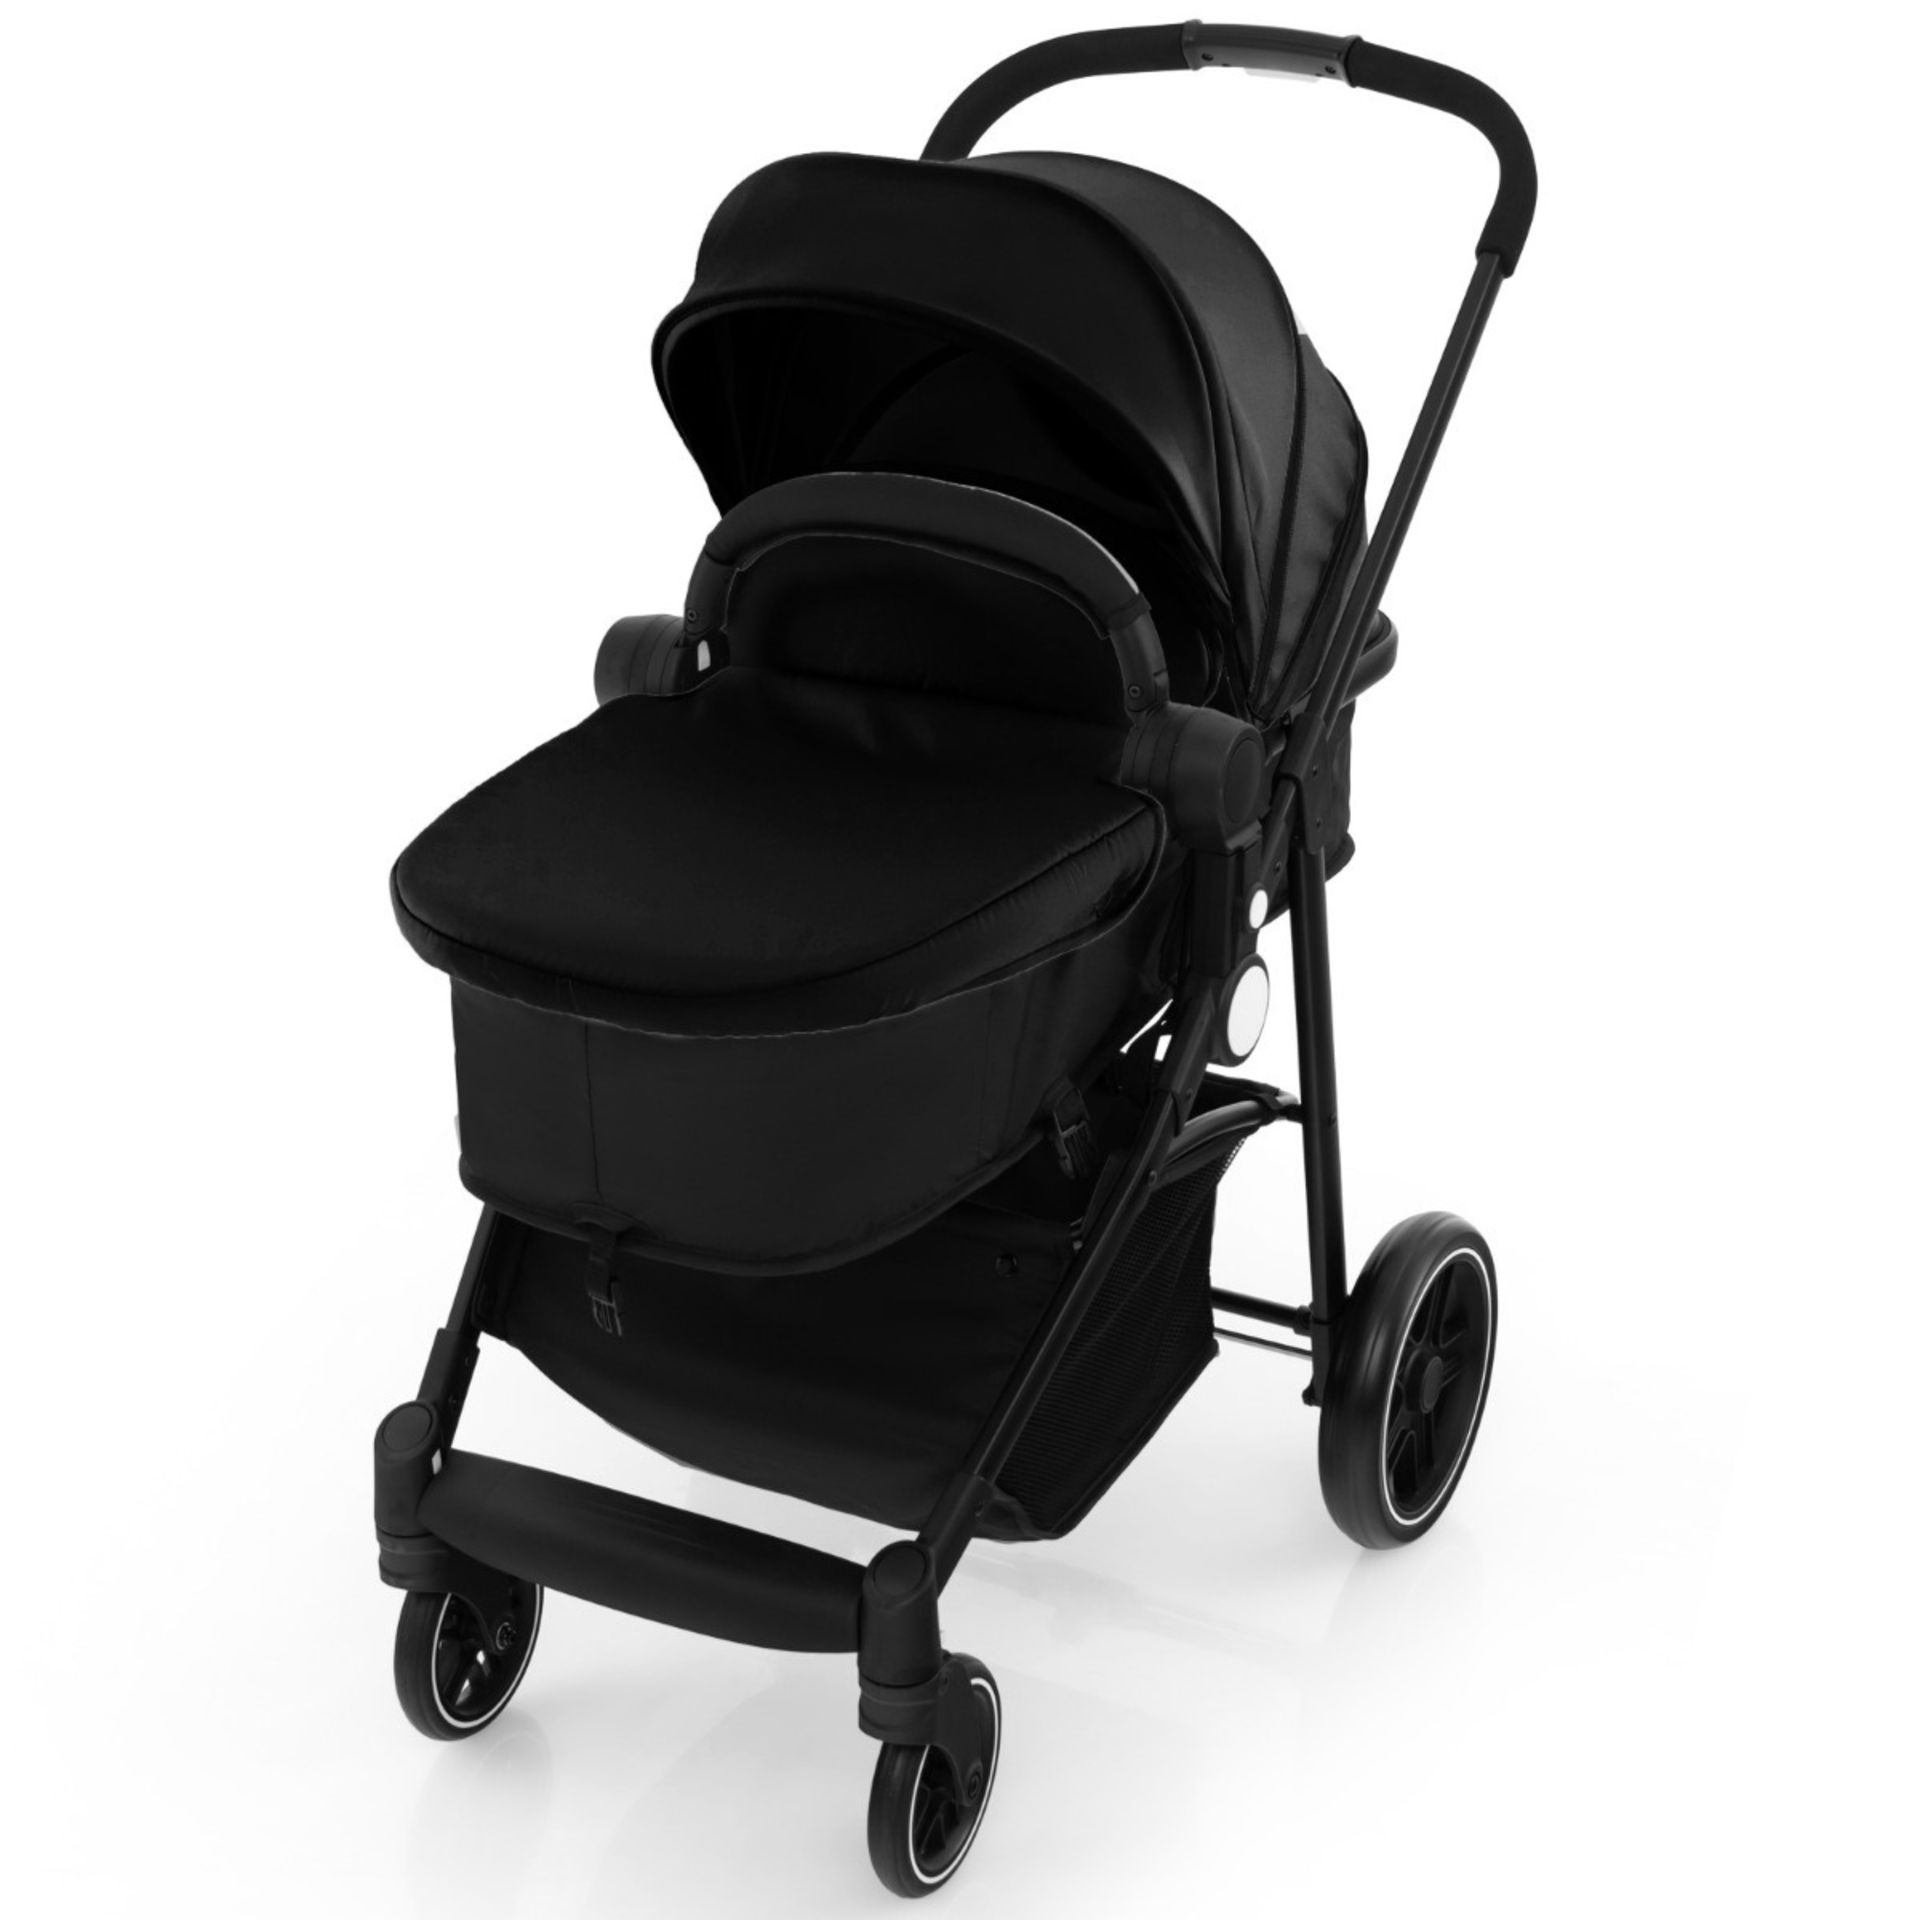 2 in 1 High Landscape Stroller with Reversible Seat and Adjustable Backrest and Canopy-Black - ER54